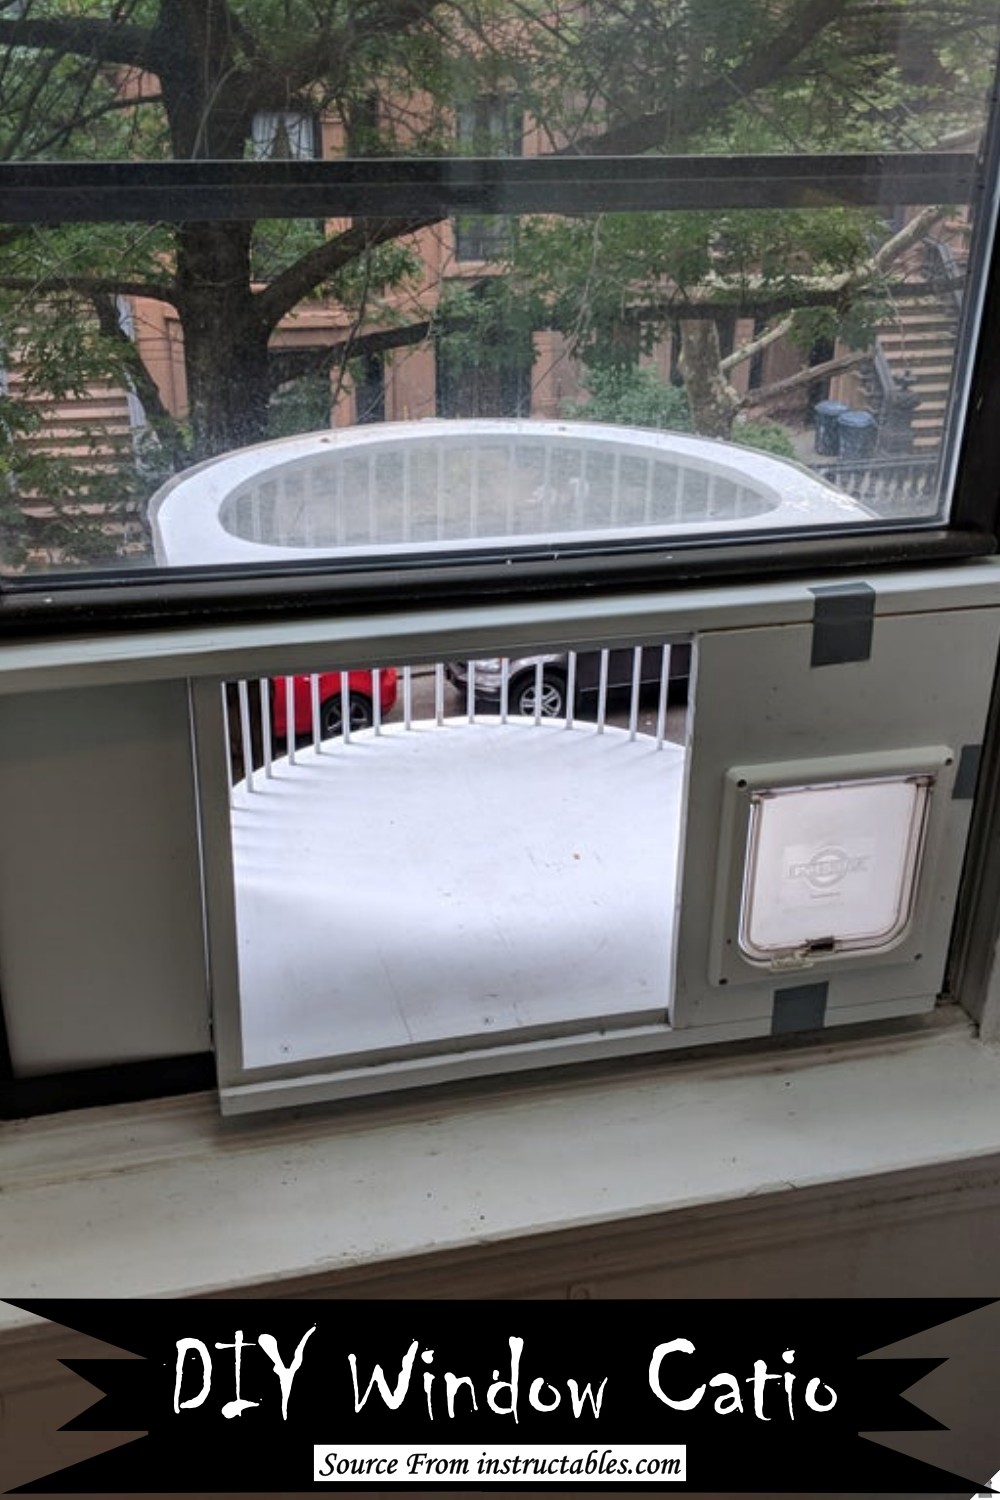 DIY Window Catio